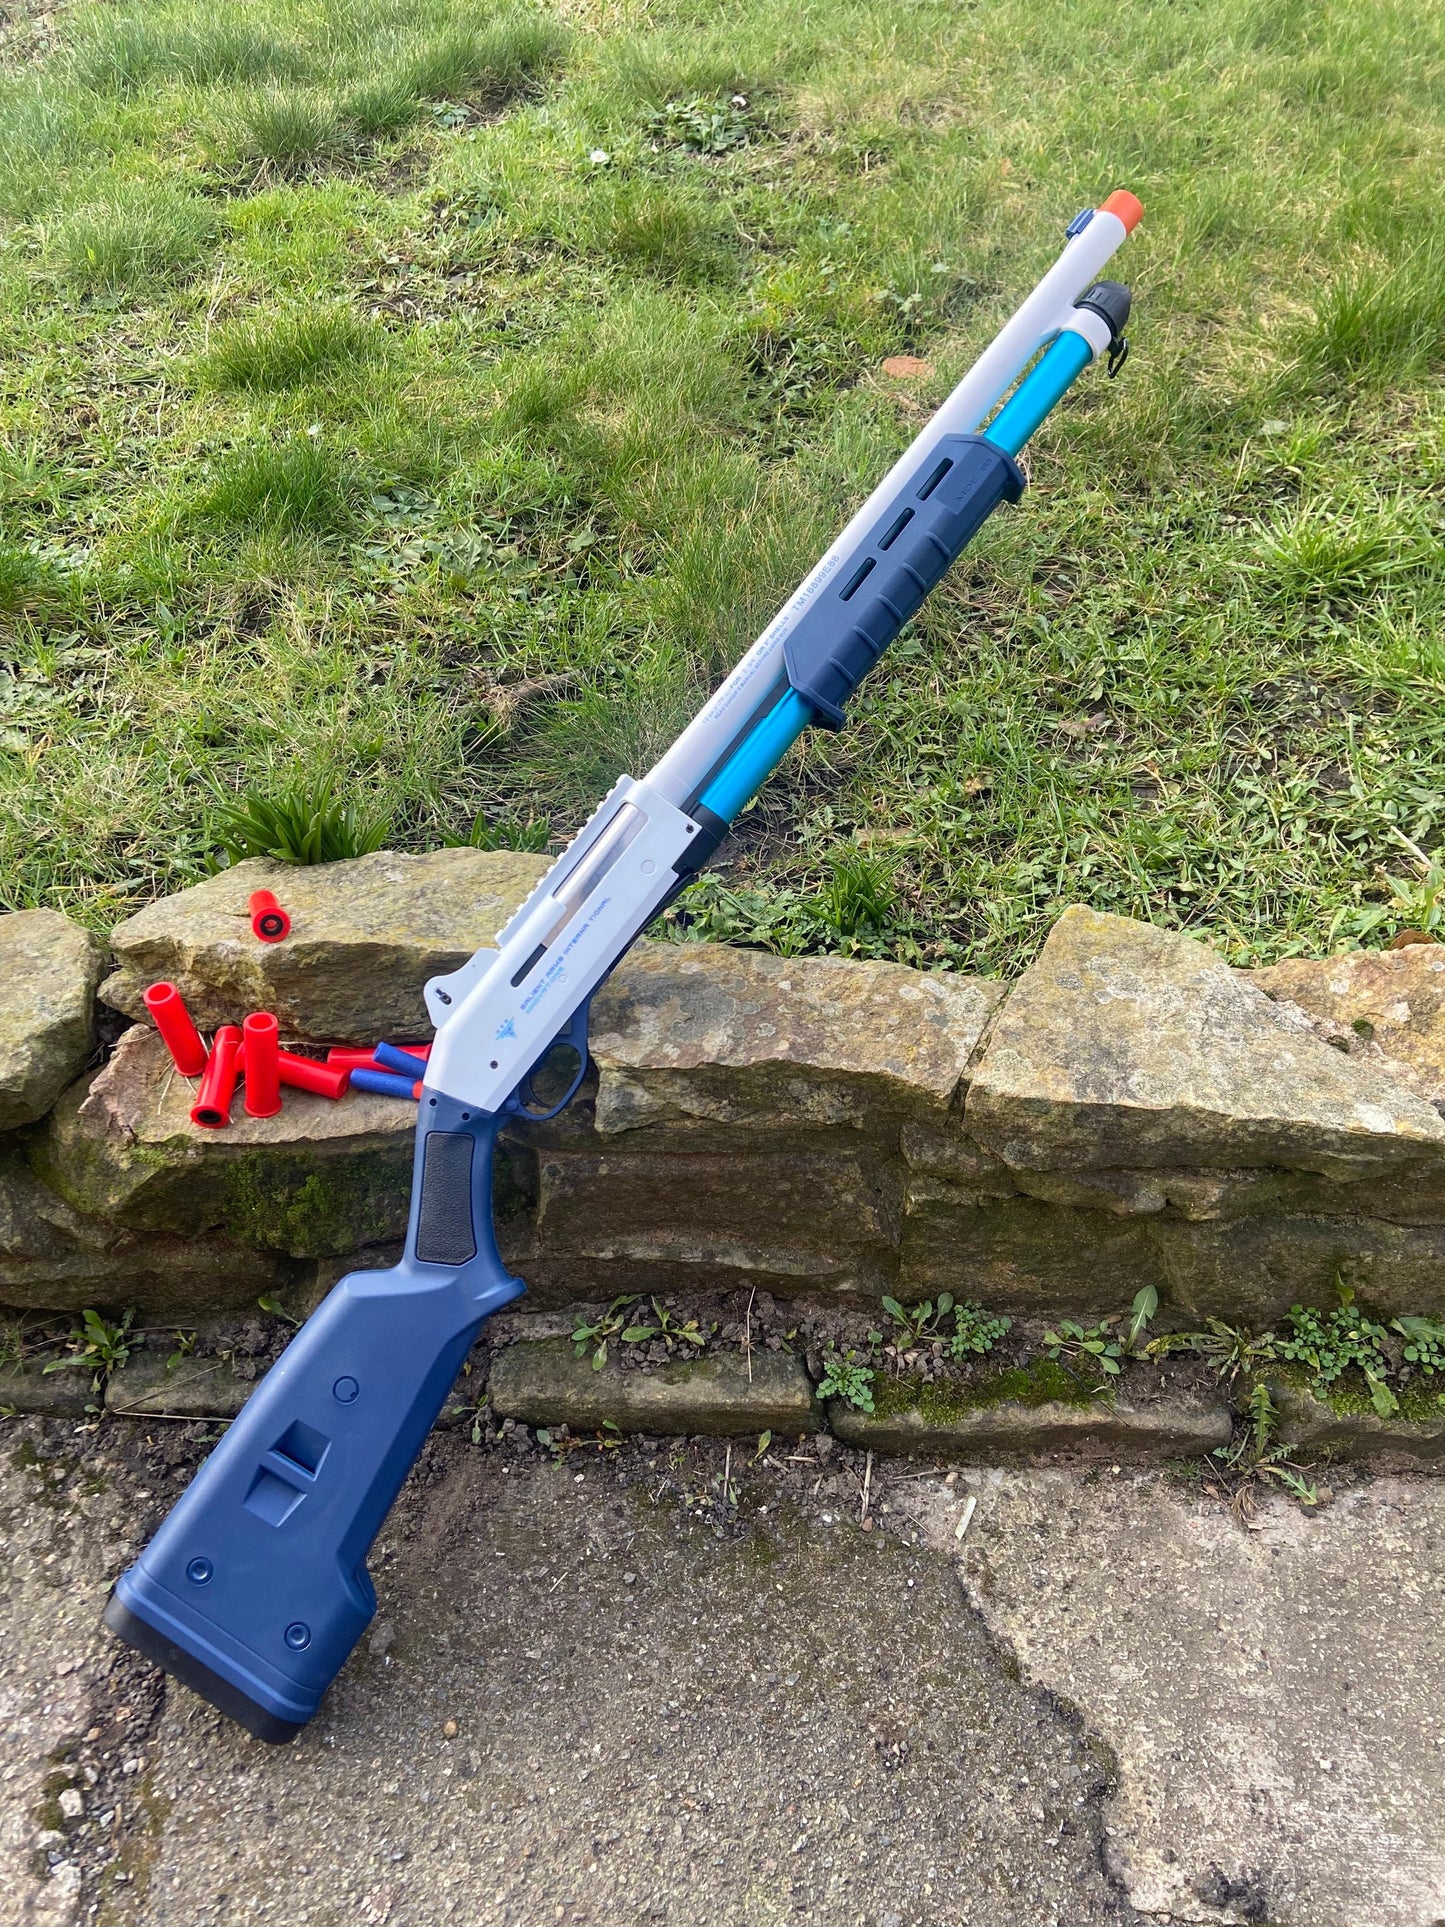 M870 Tactical Shotgun Shell Ejecting Dart Blaster Prop Cosplay Toy Gun